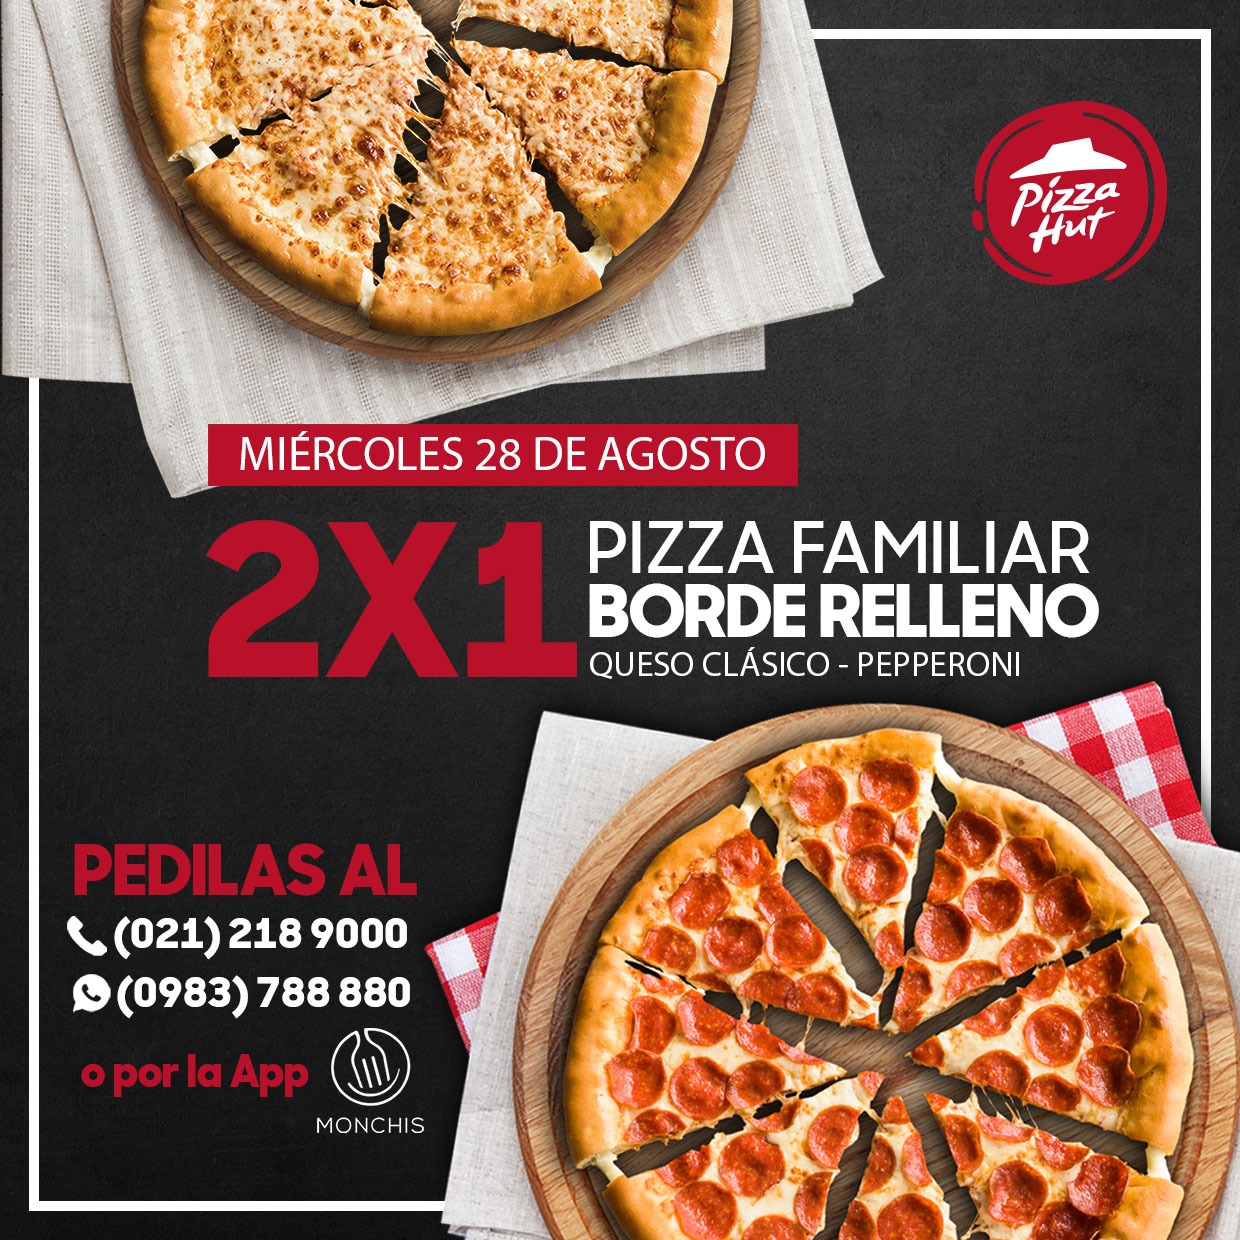 Promo 2×1 familiar de Pizza Hut